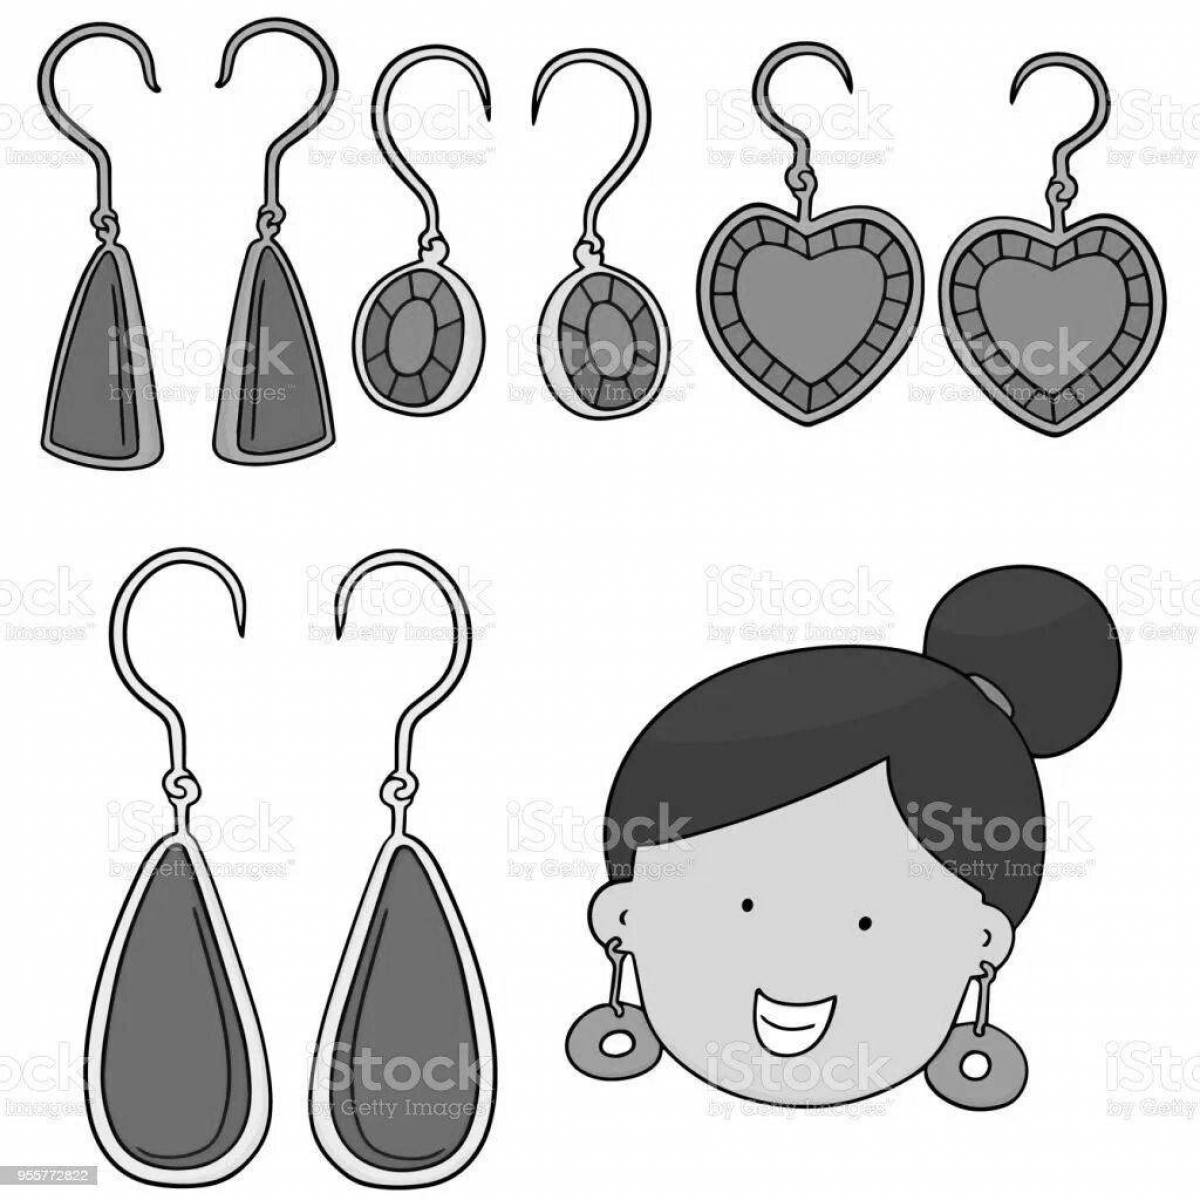 Joyful coloring earrings for babies